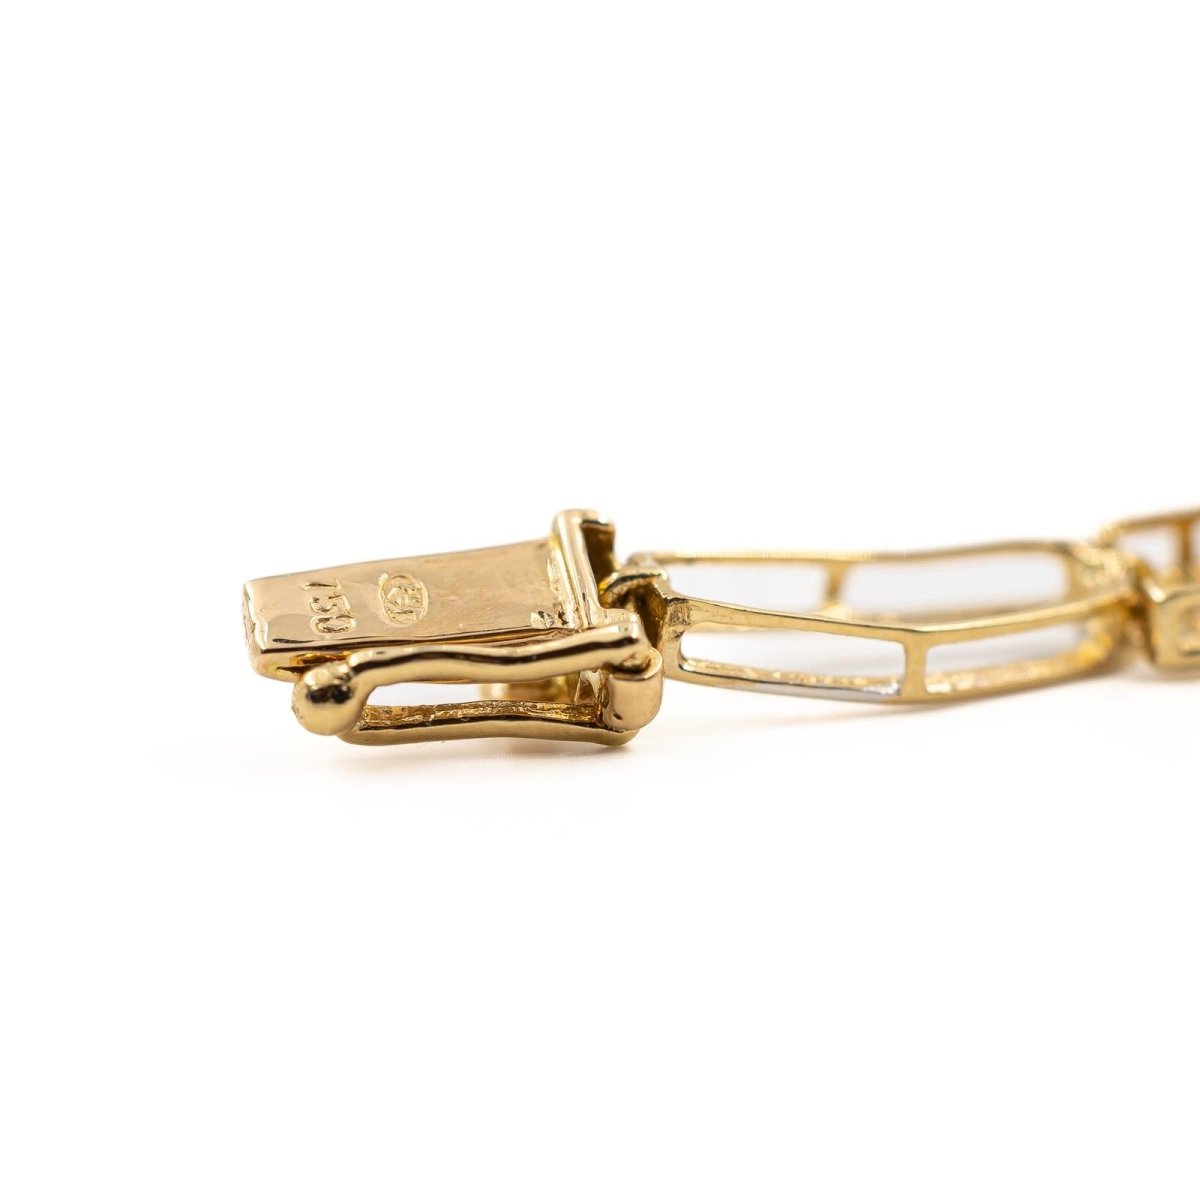 Bracelet Maille alternée or jaune et pavée diamants - Castafiore